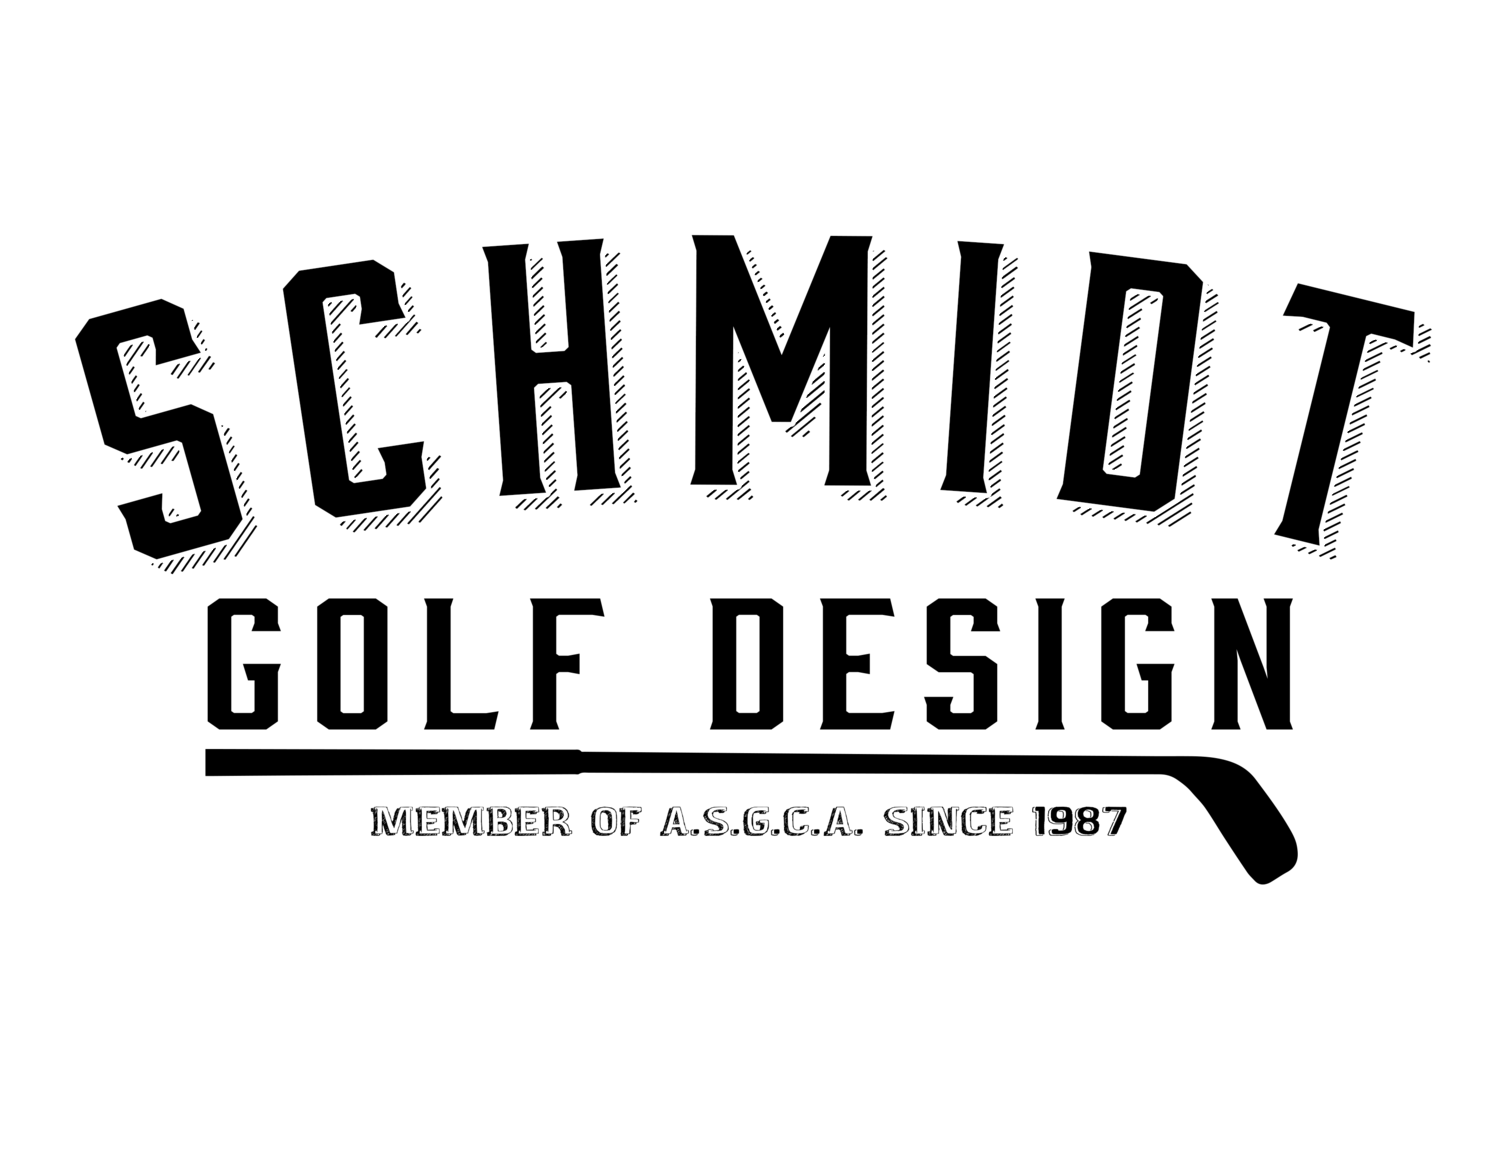 Schmidt Golf Design